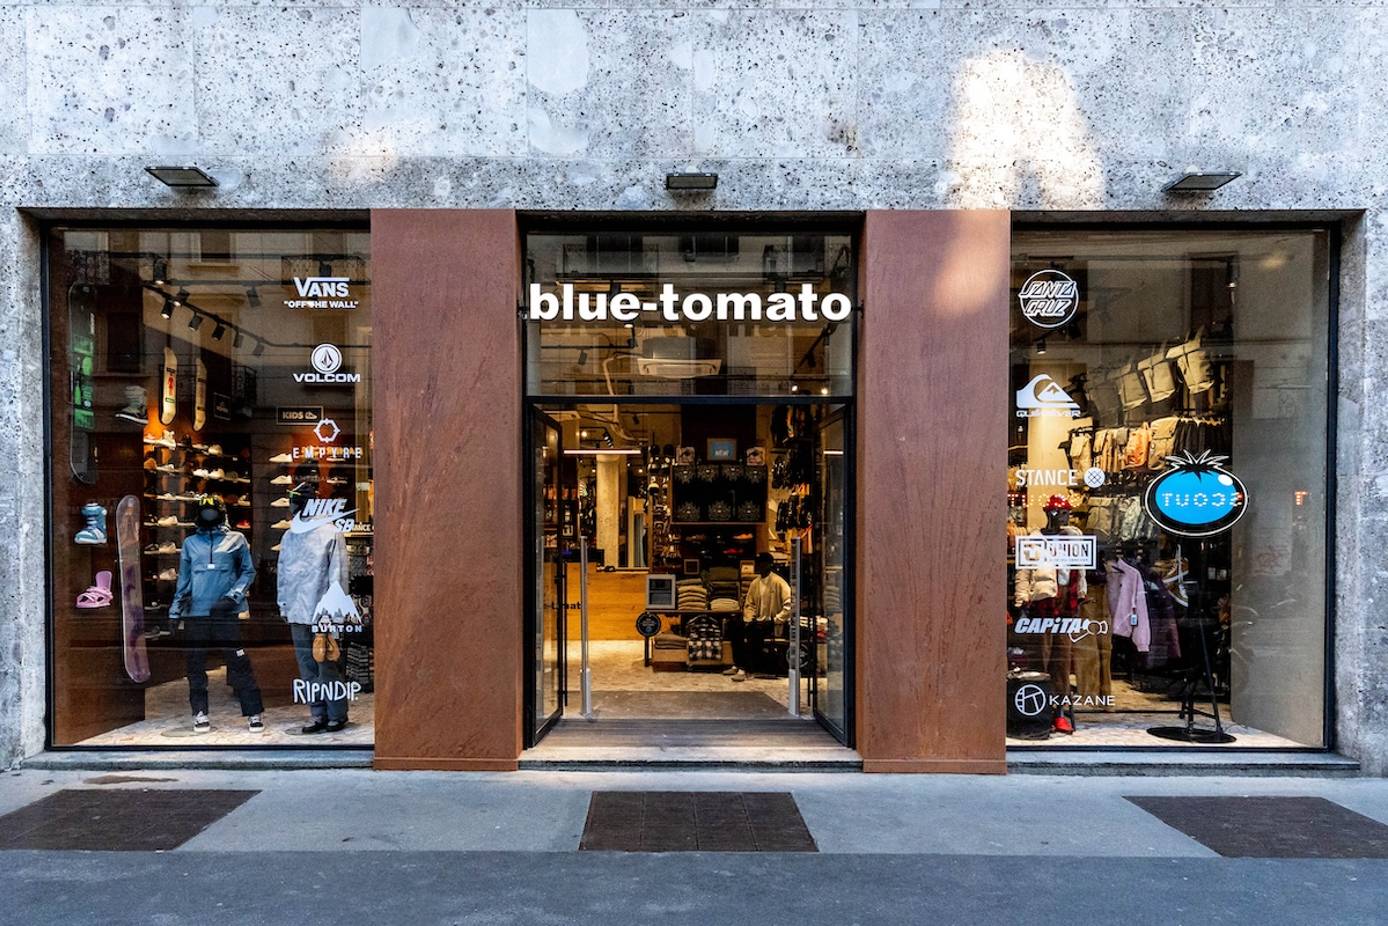 Blue Tomato GmbH